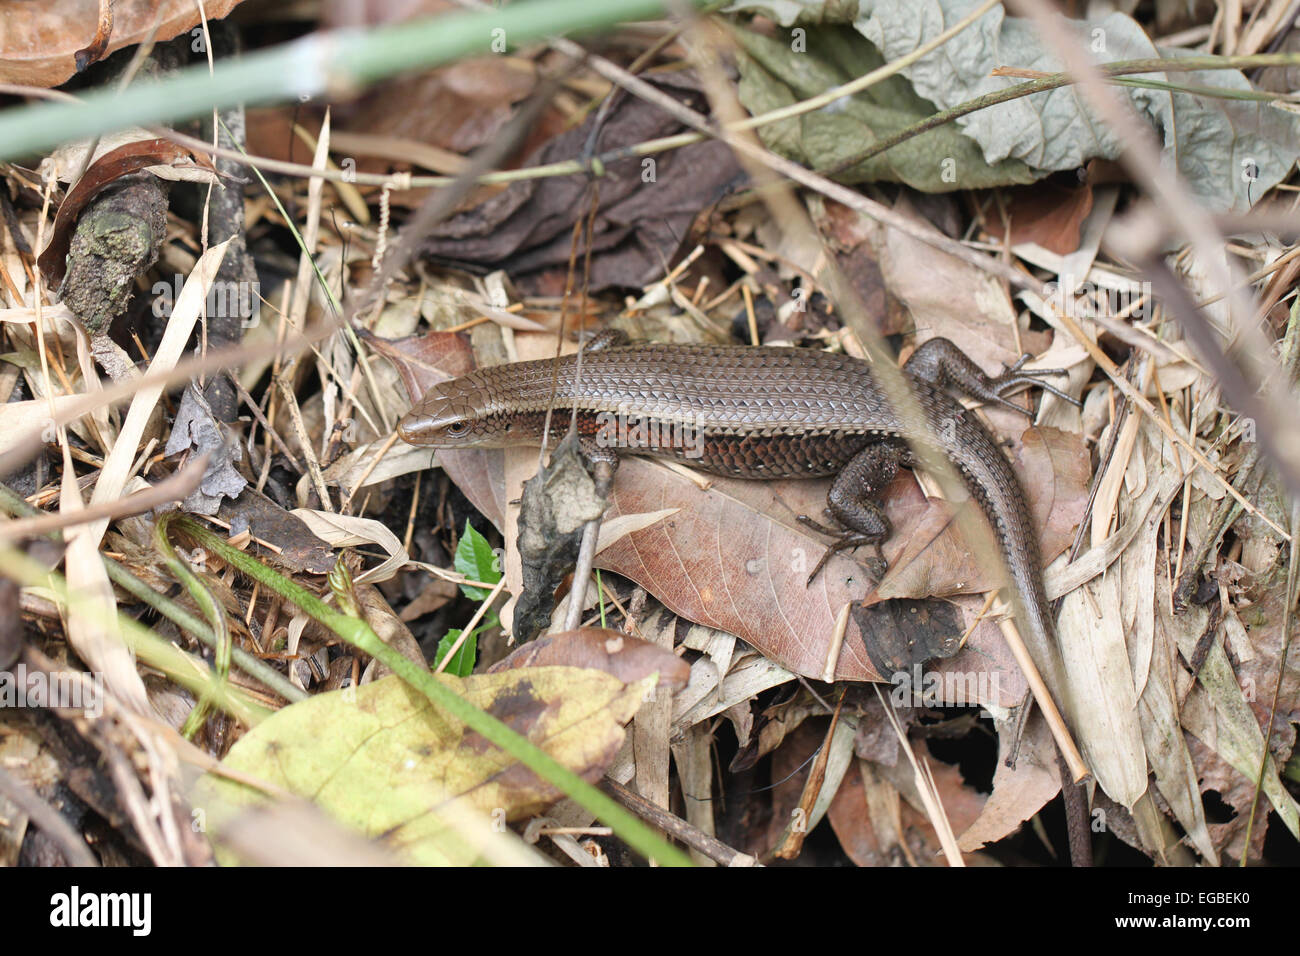 Skink or iguana on ground in the garden. Stock Photo